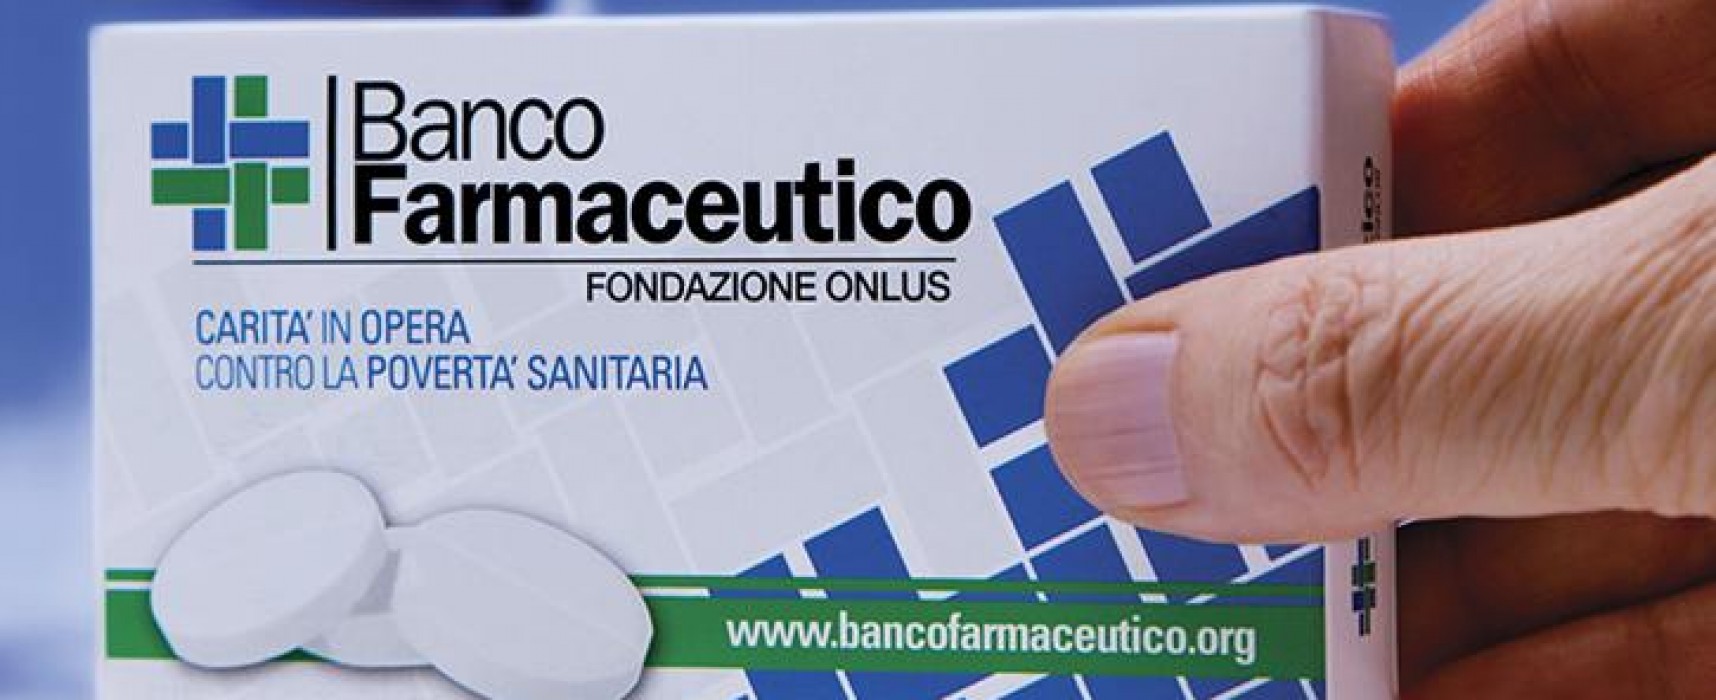 banco farmaceuitco 1716x700 c